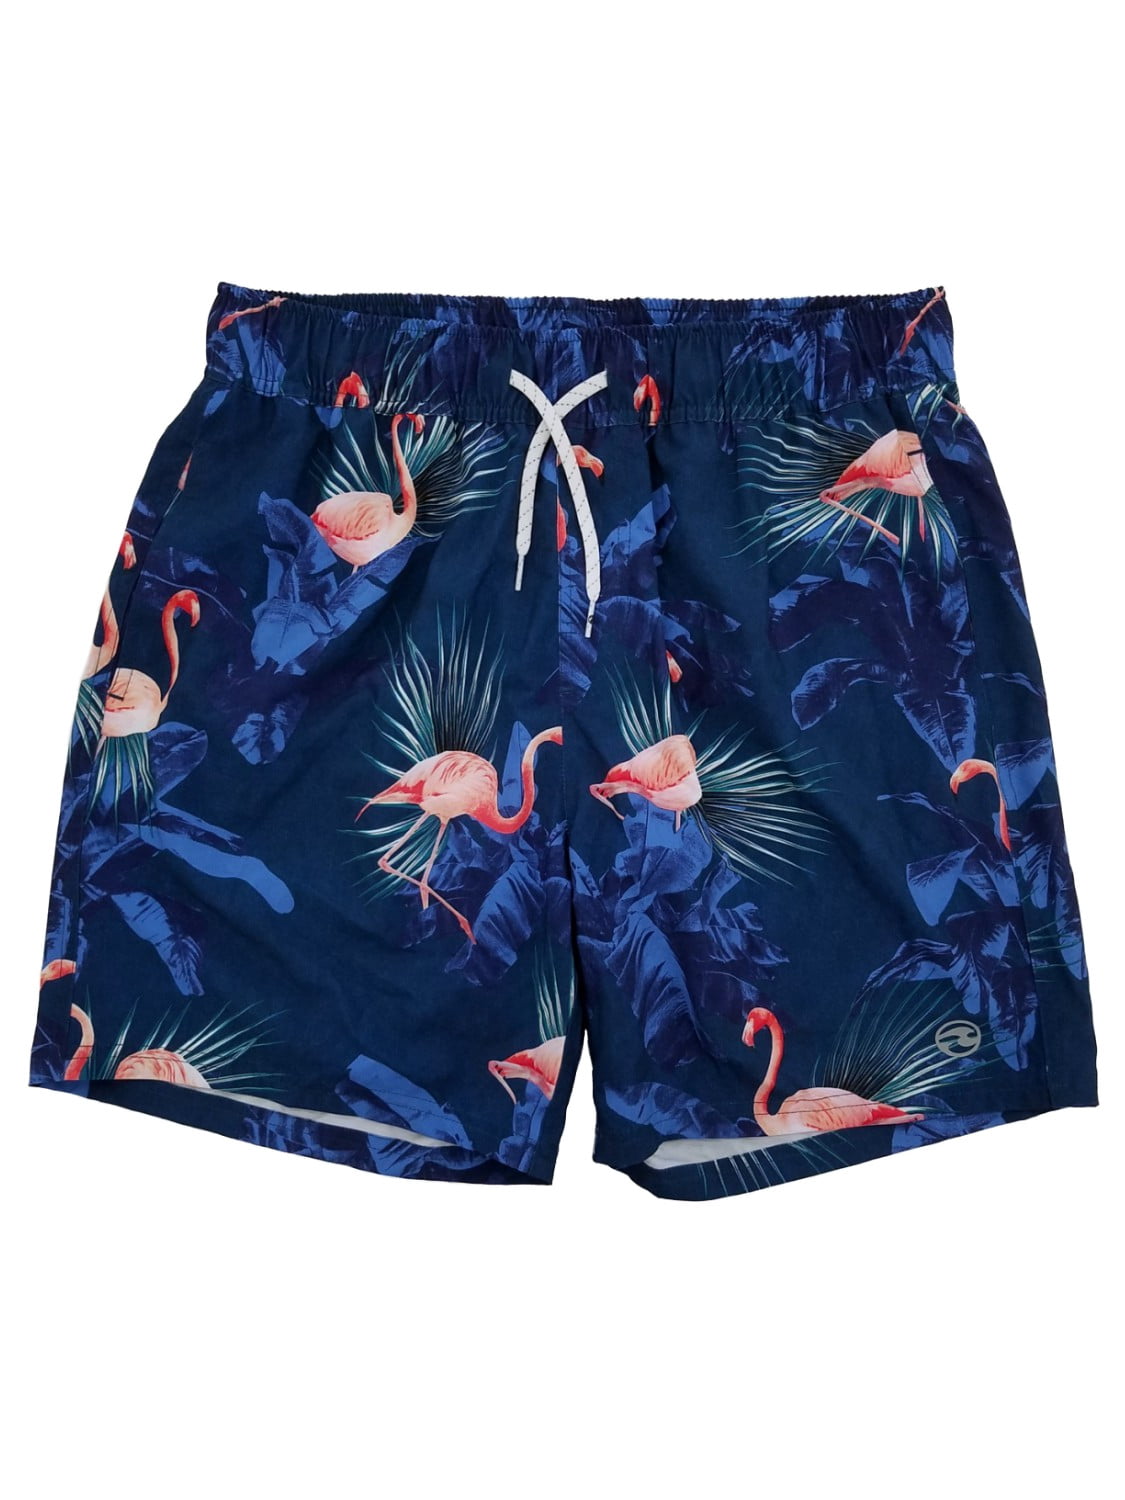 Ocean Current - Mens Teal Blue Pink Flamingo Tropical Board Shorts Swim ...